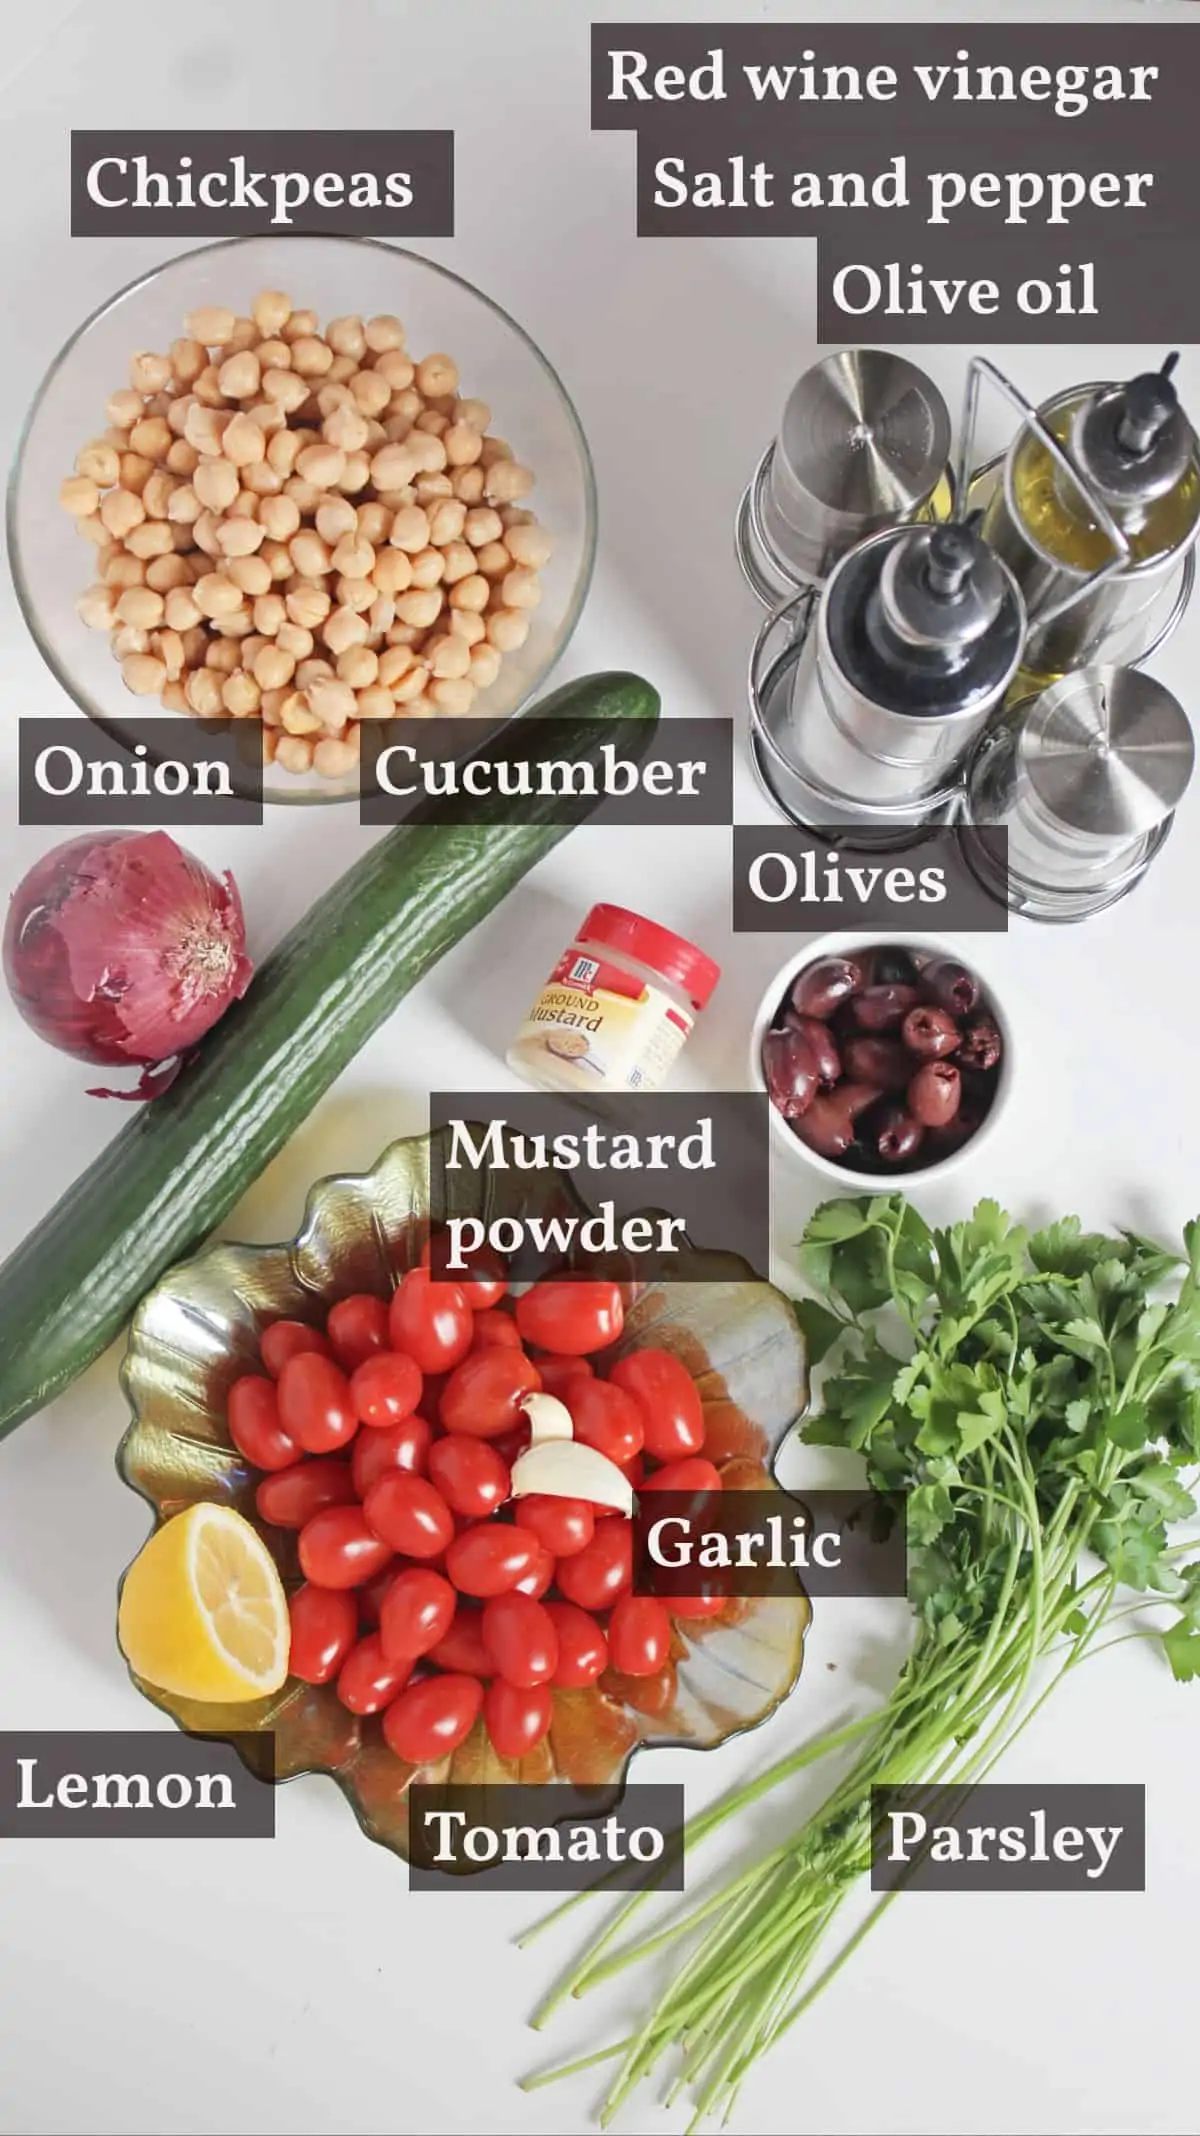 Ingredients used to make chickpeas salad